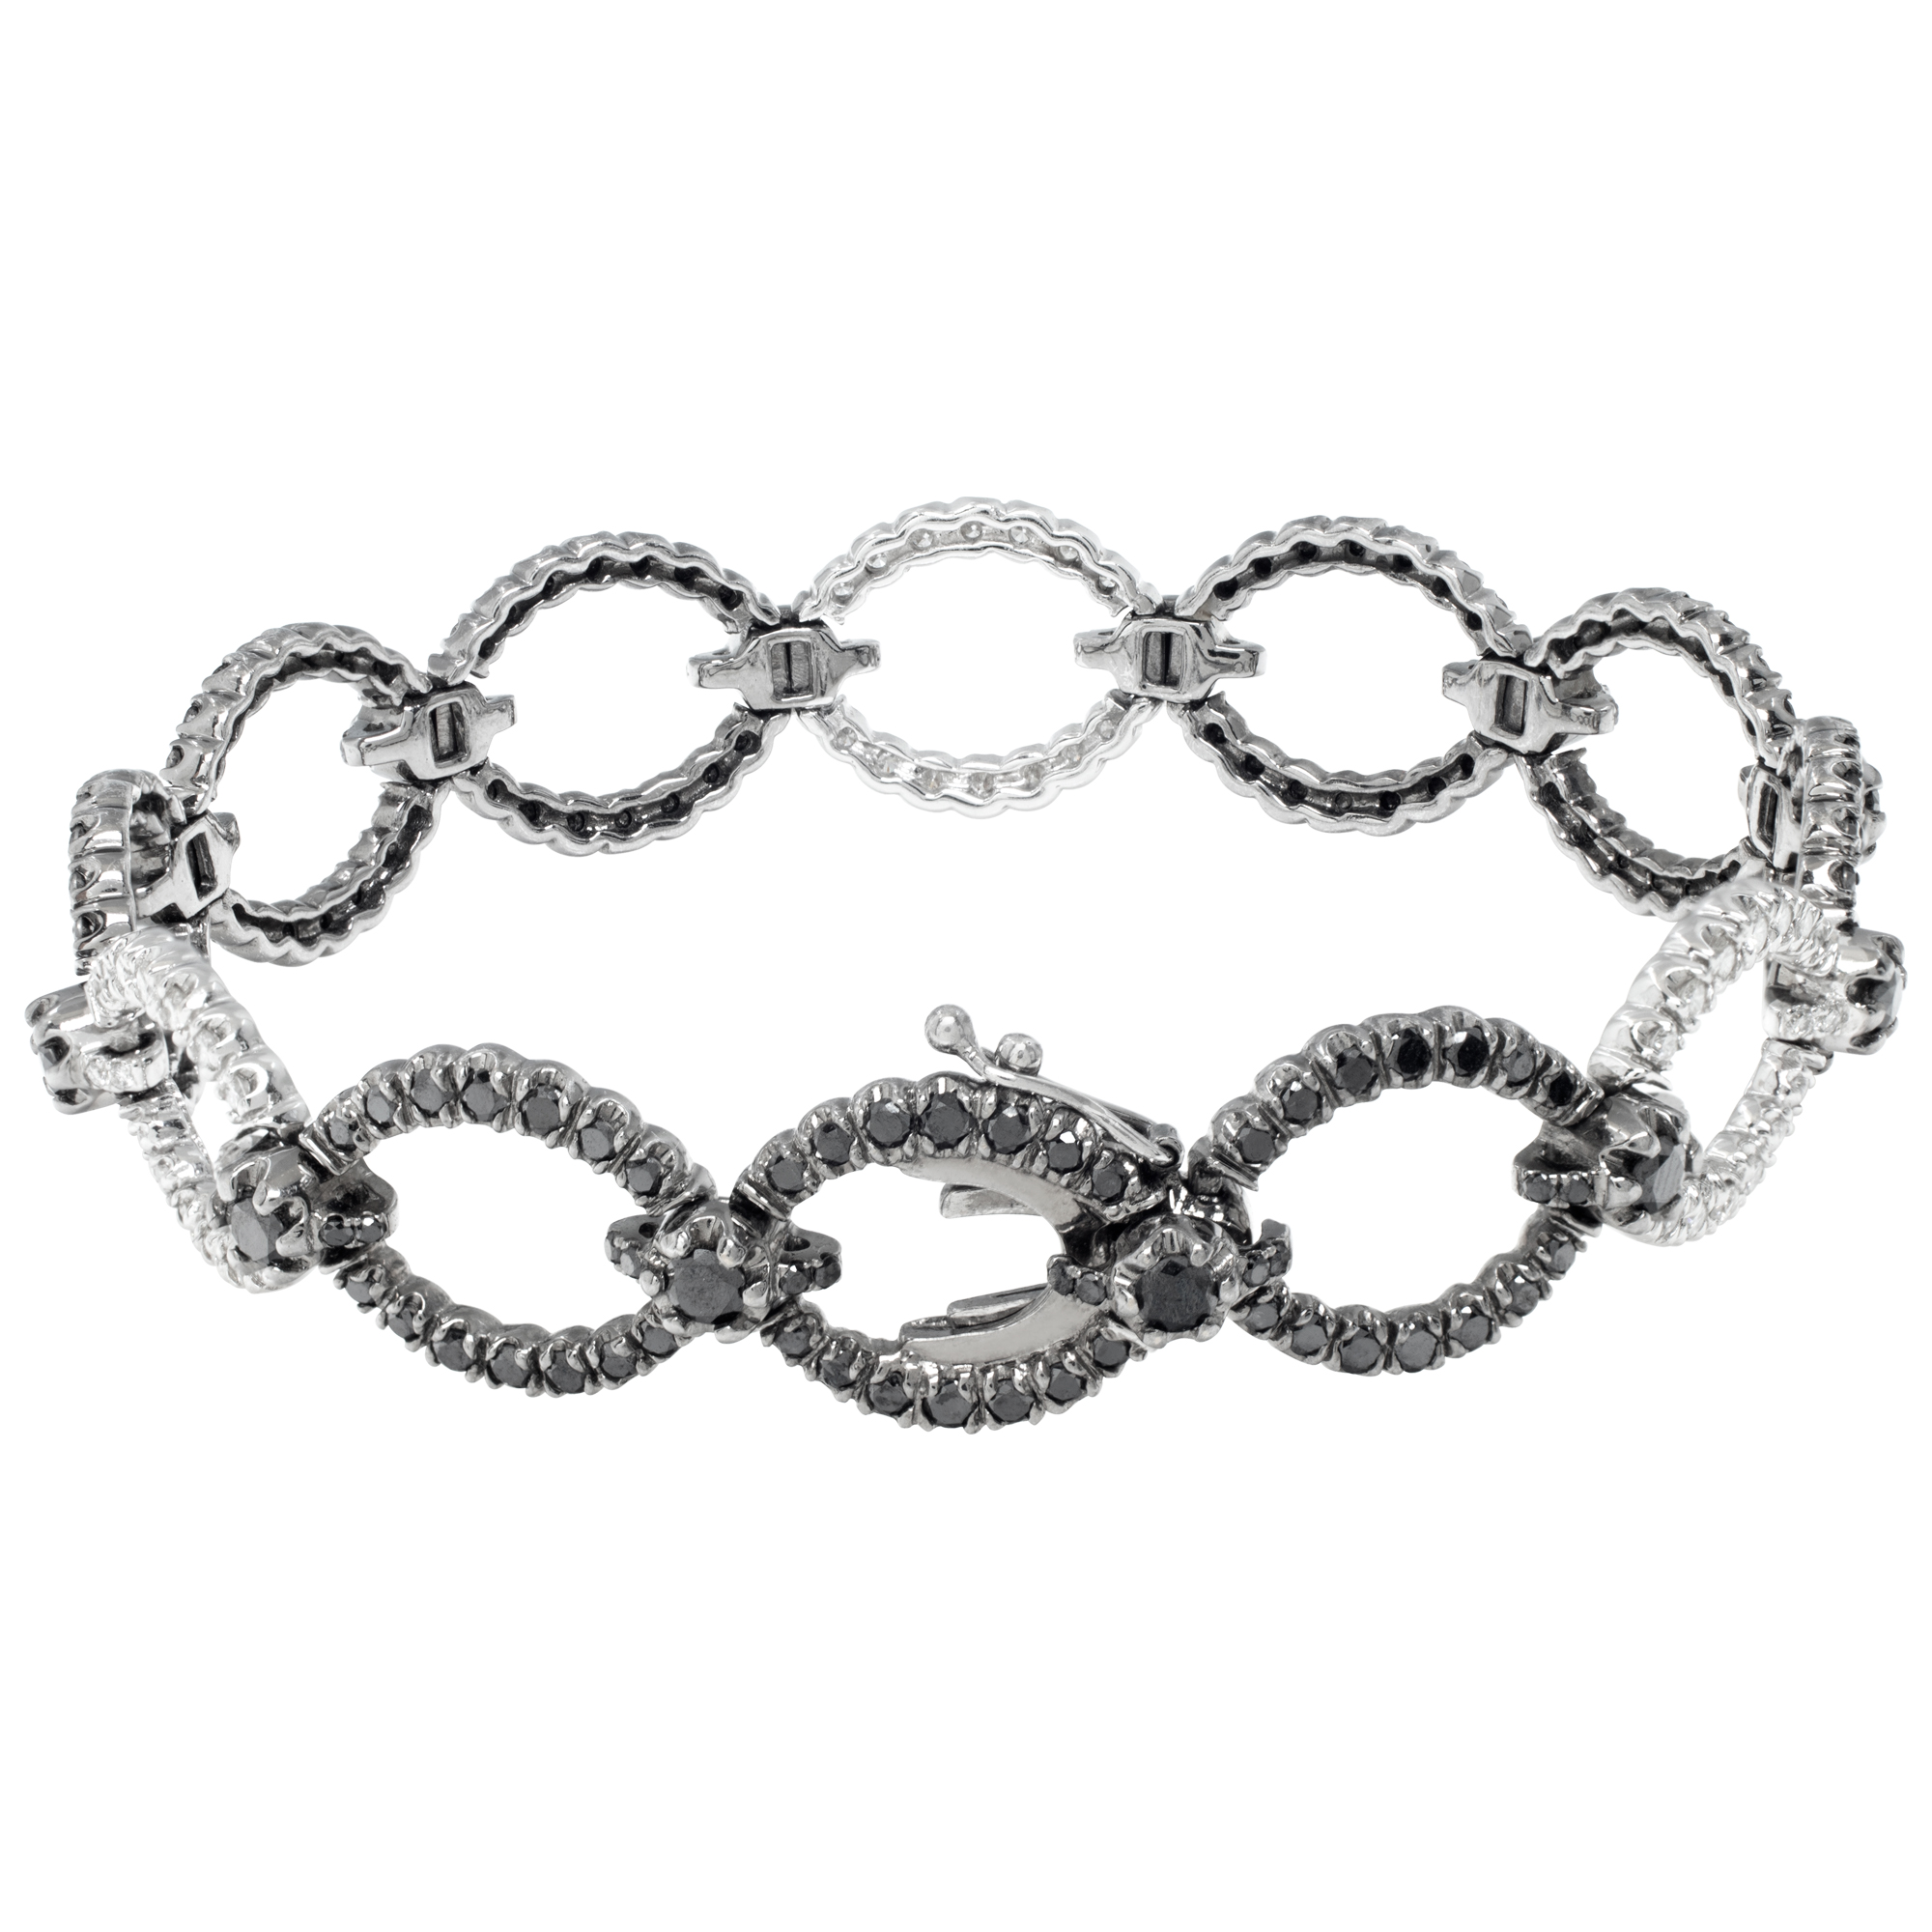 Black & White diamond bracelet in 18k white gold